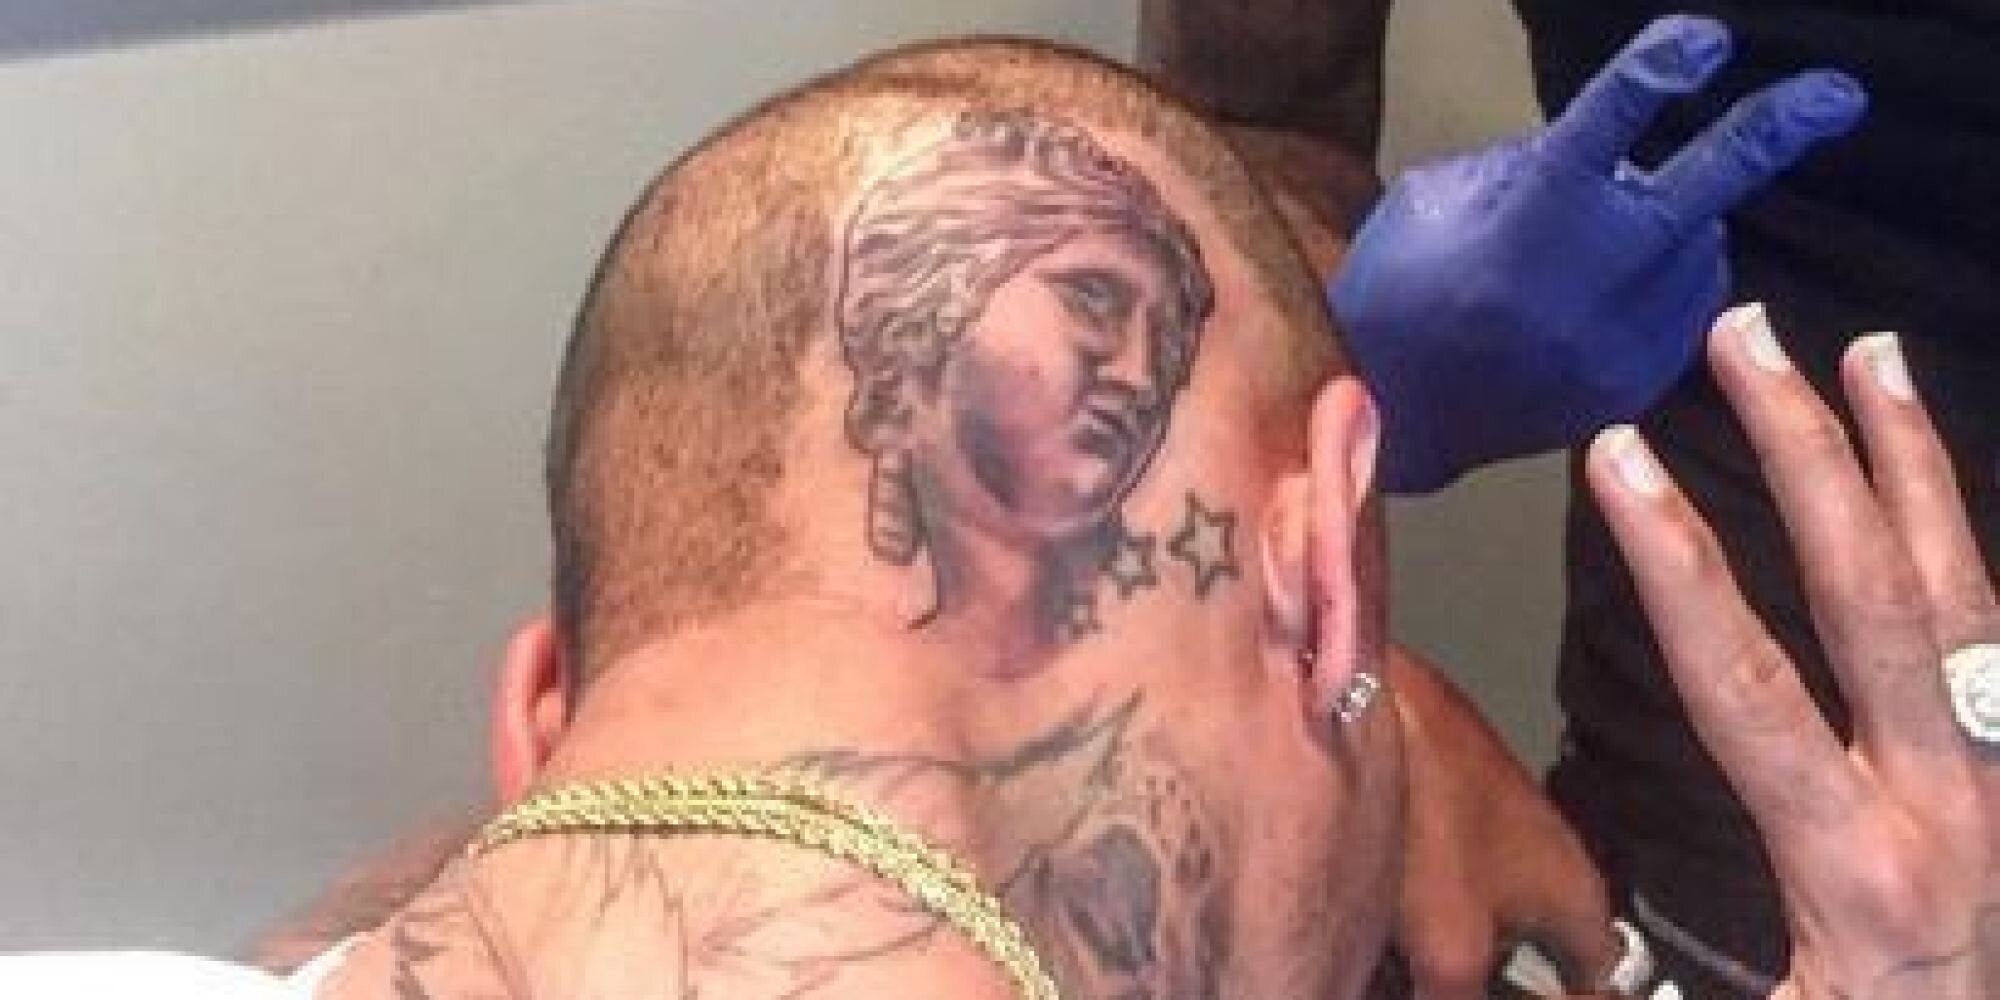 Buddha inspired tattoo located on Chris Brown's hand.